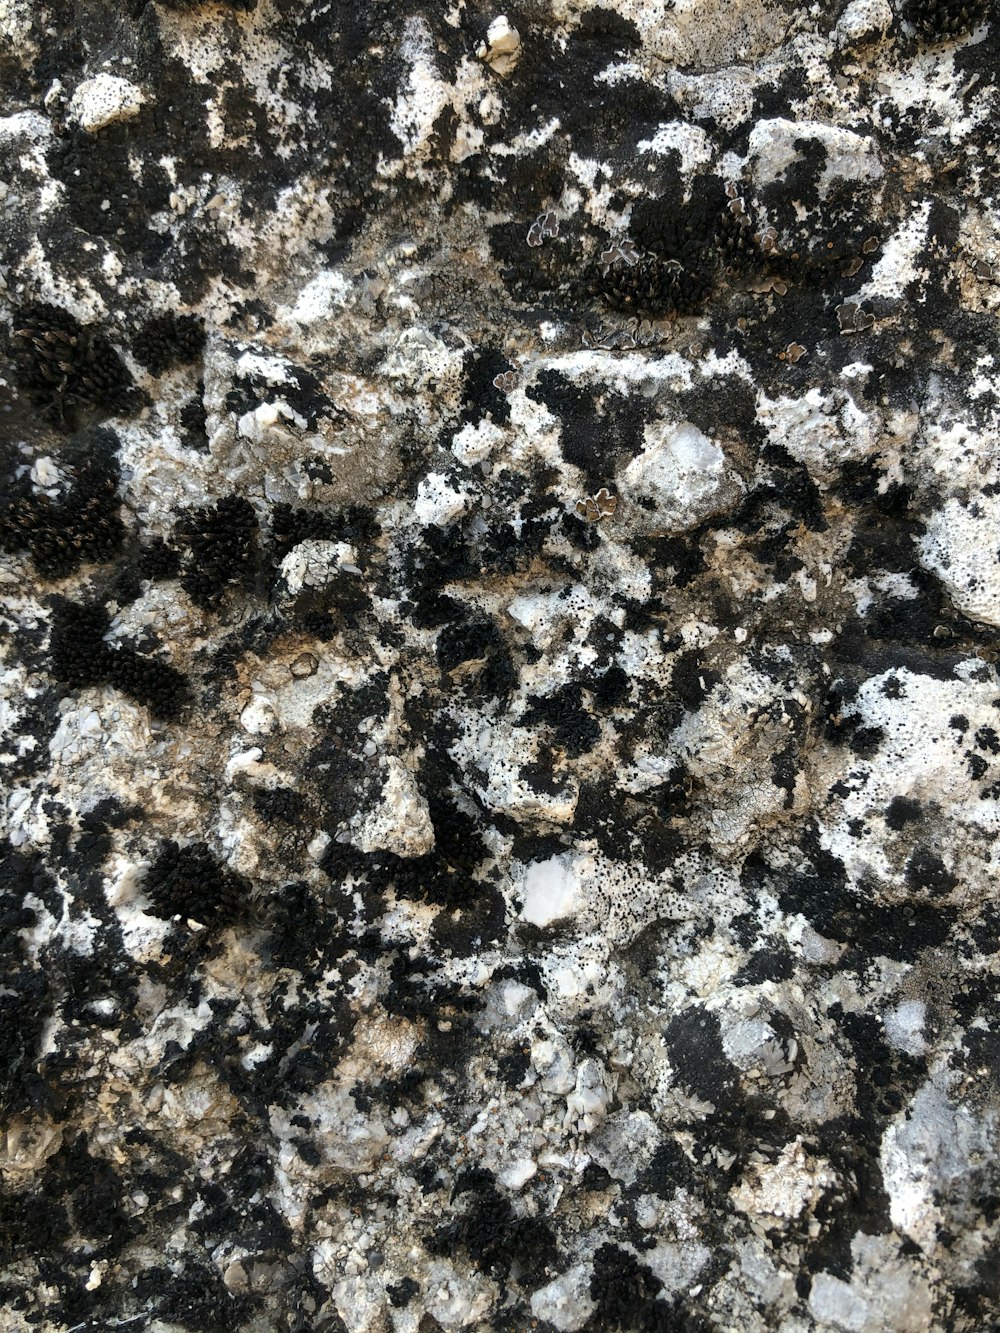 black and white stone fragments